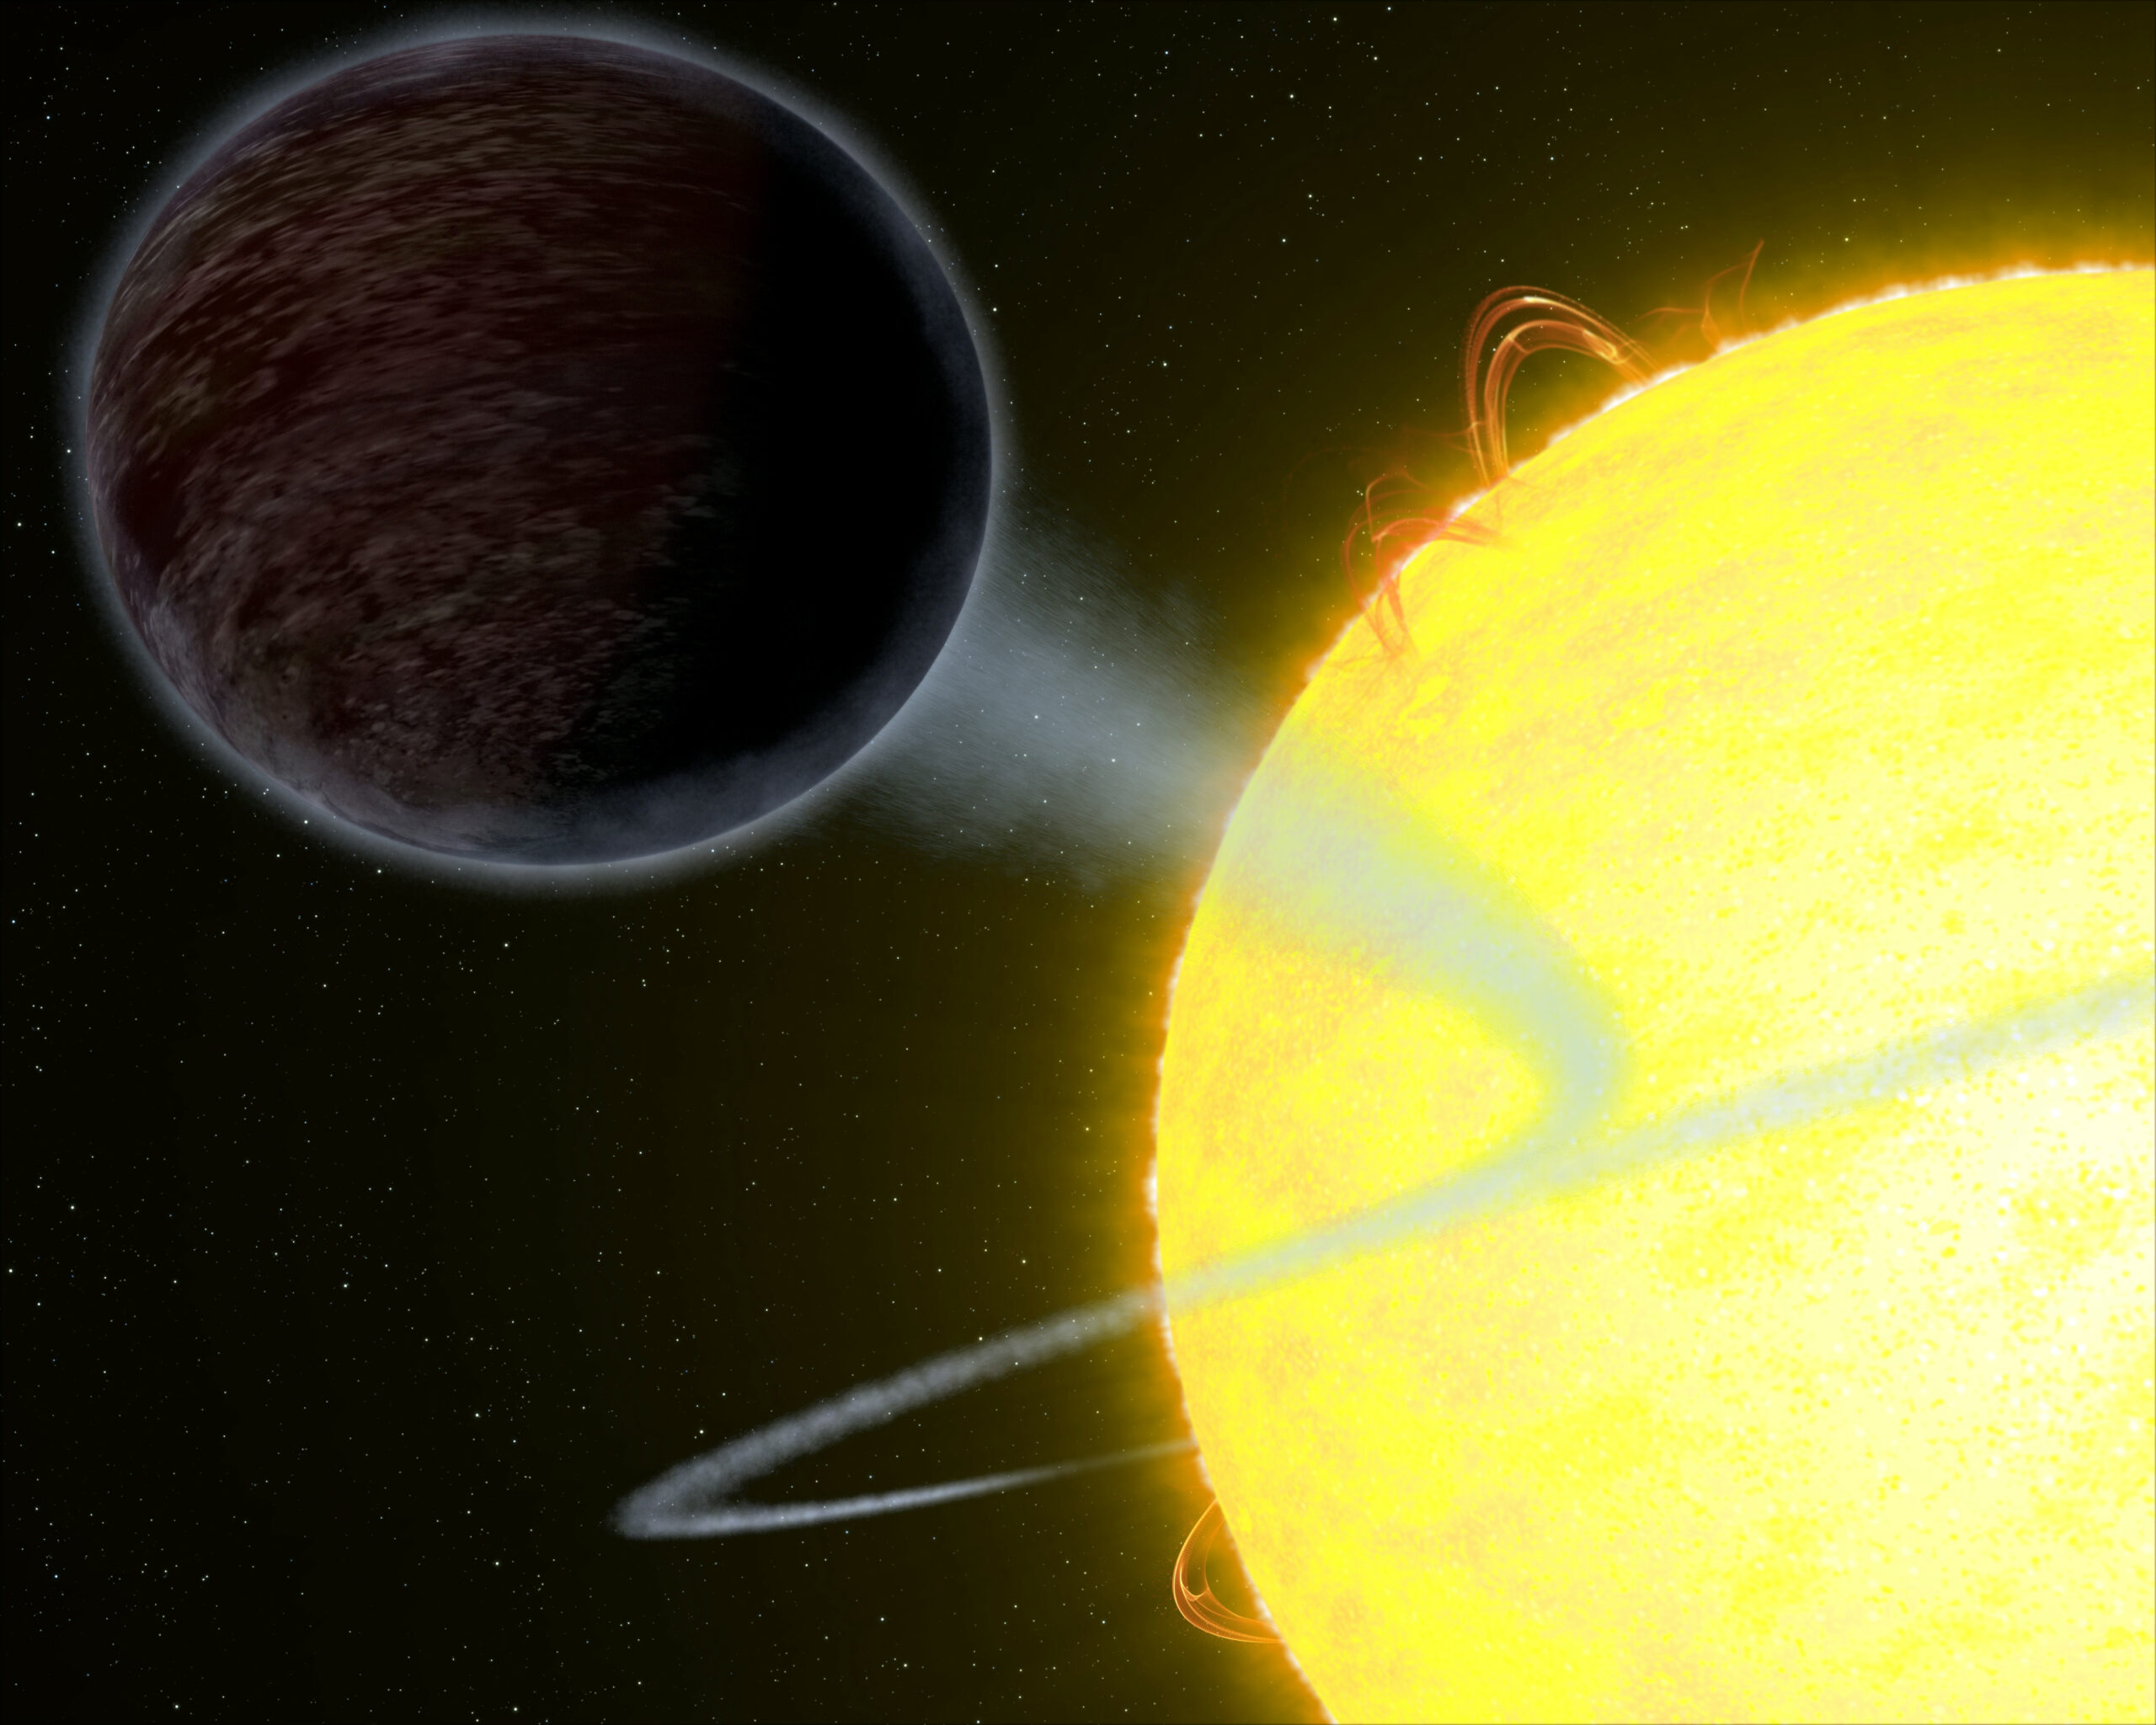 WASP-12b exoplanet